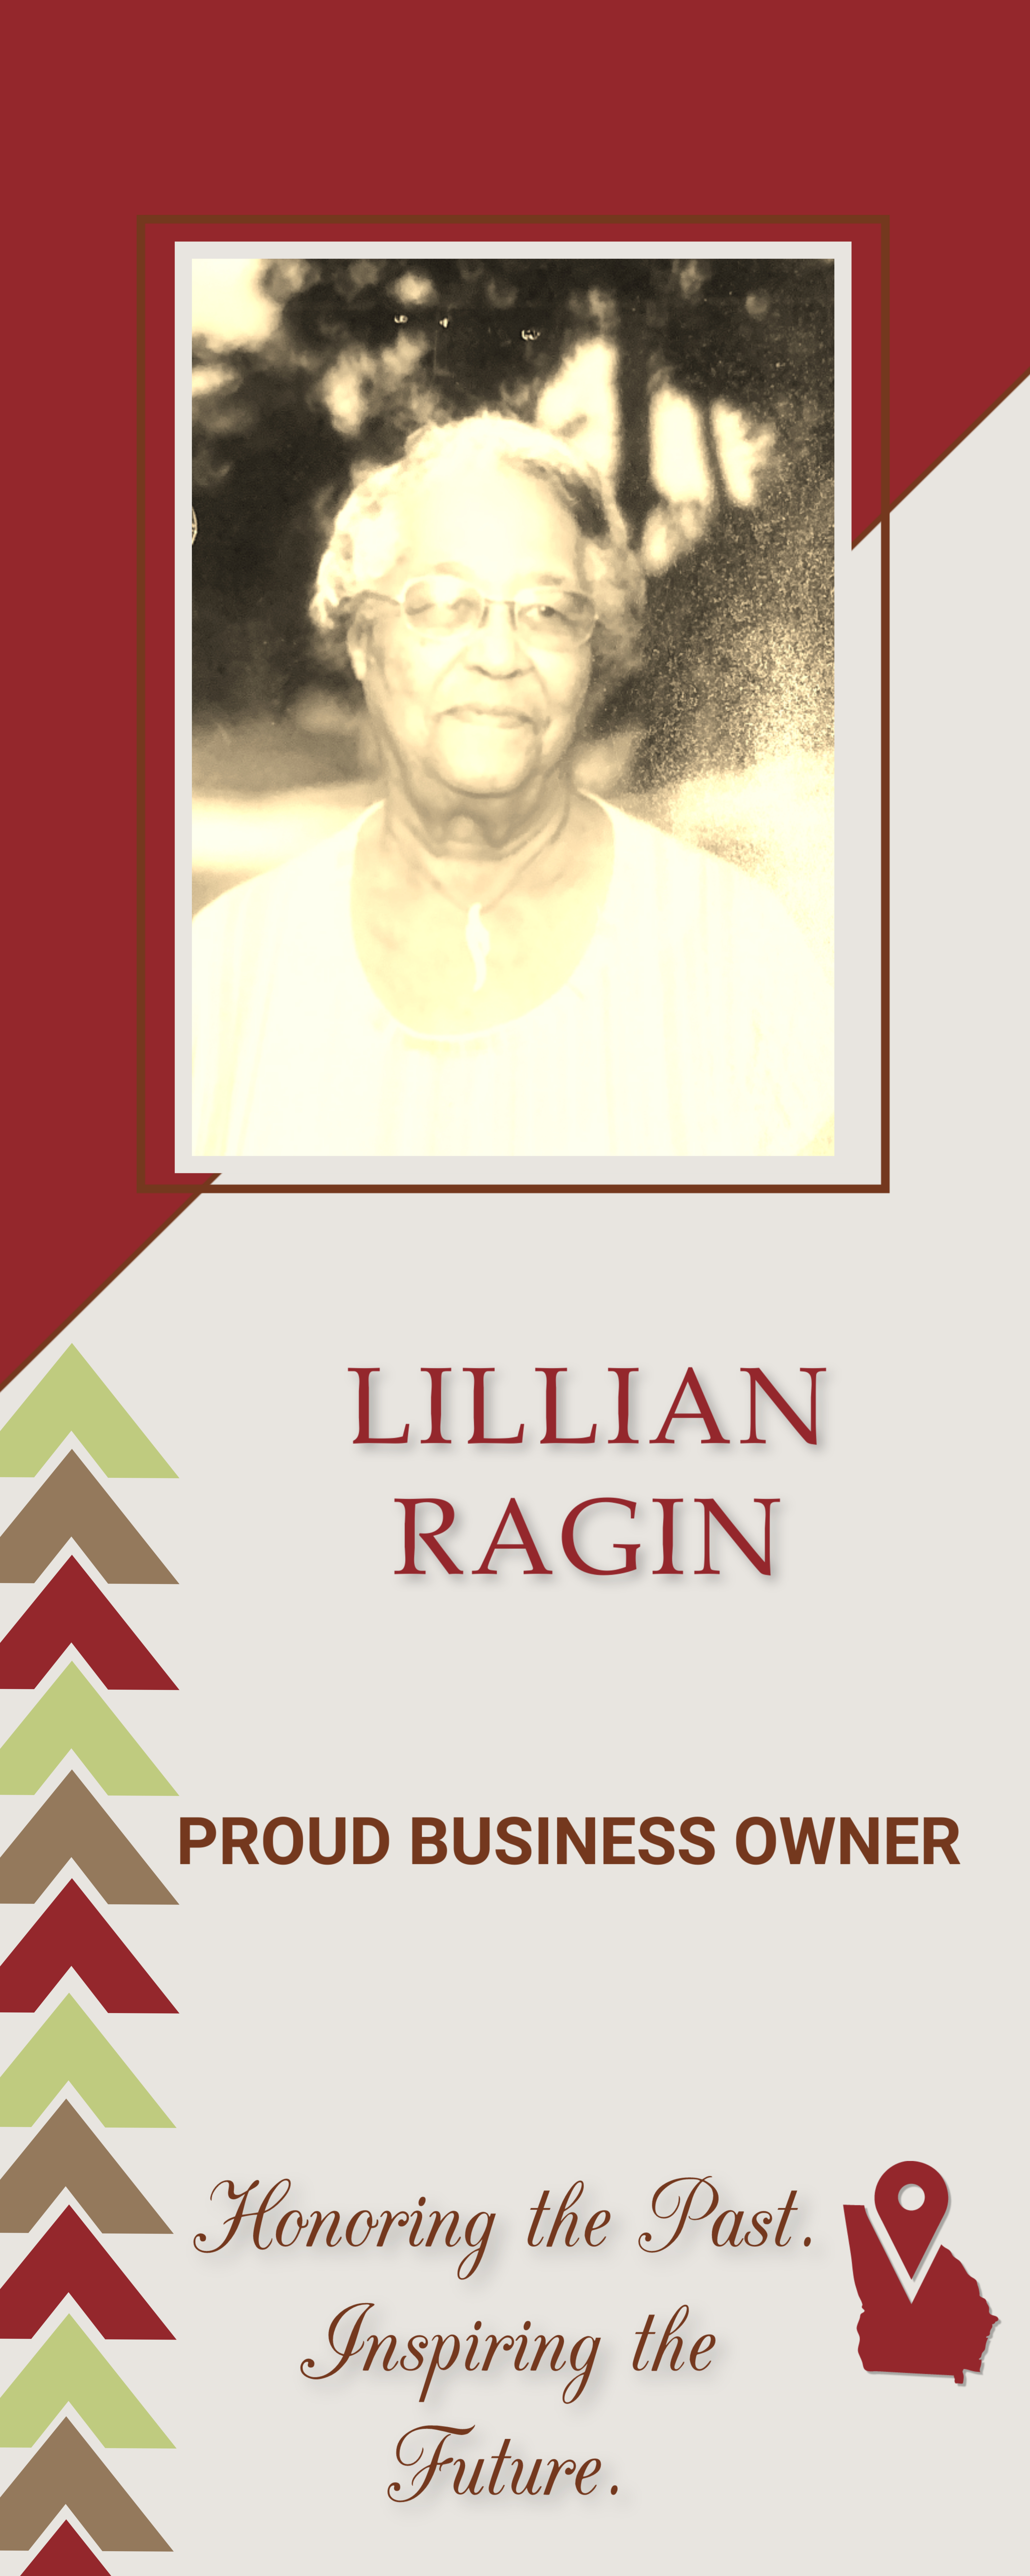 Lillian Ragin